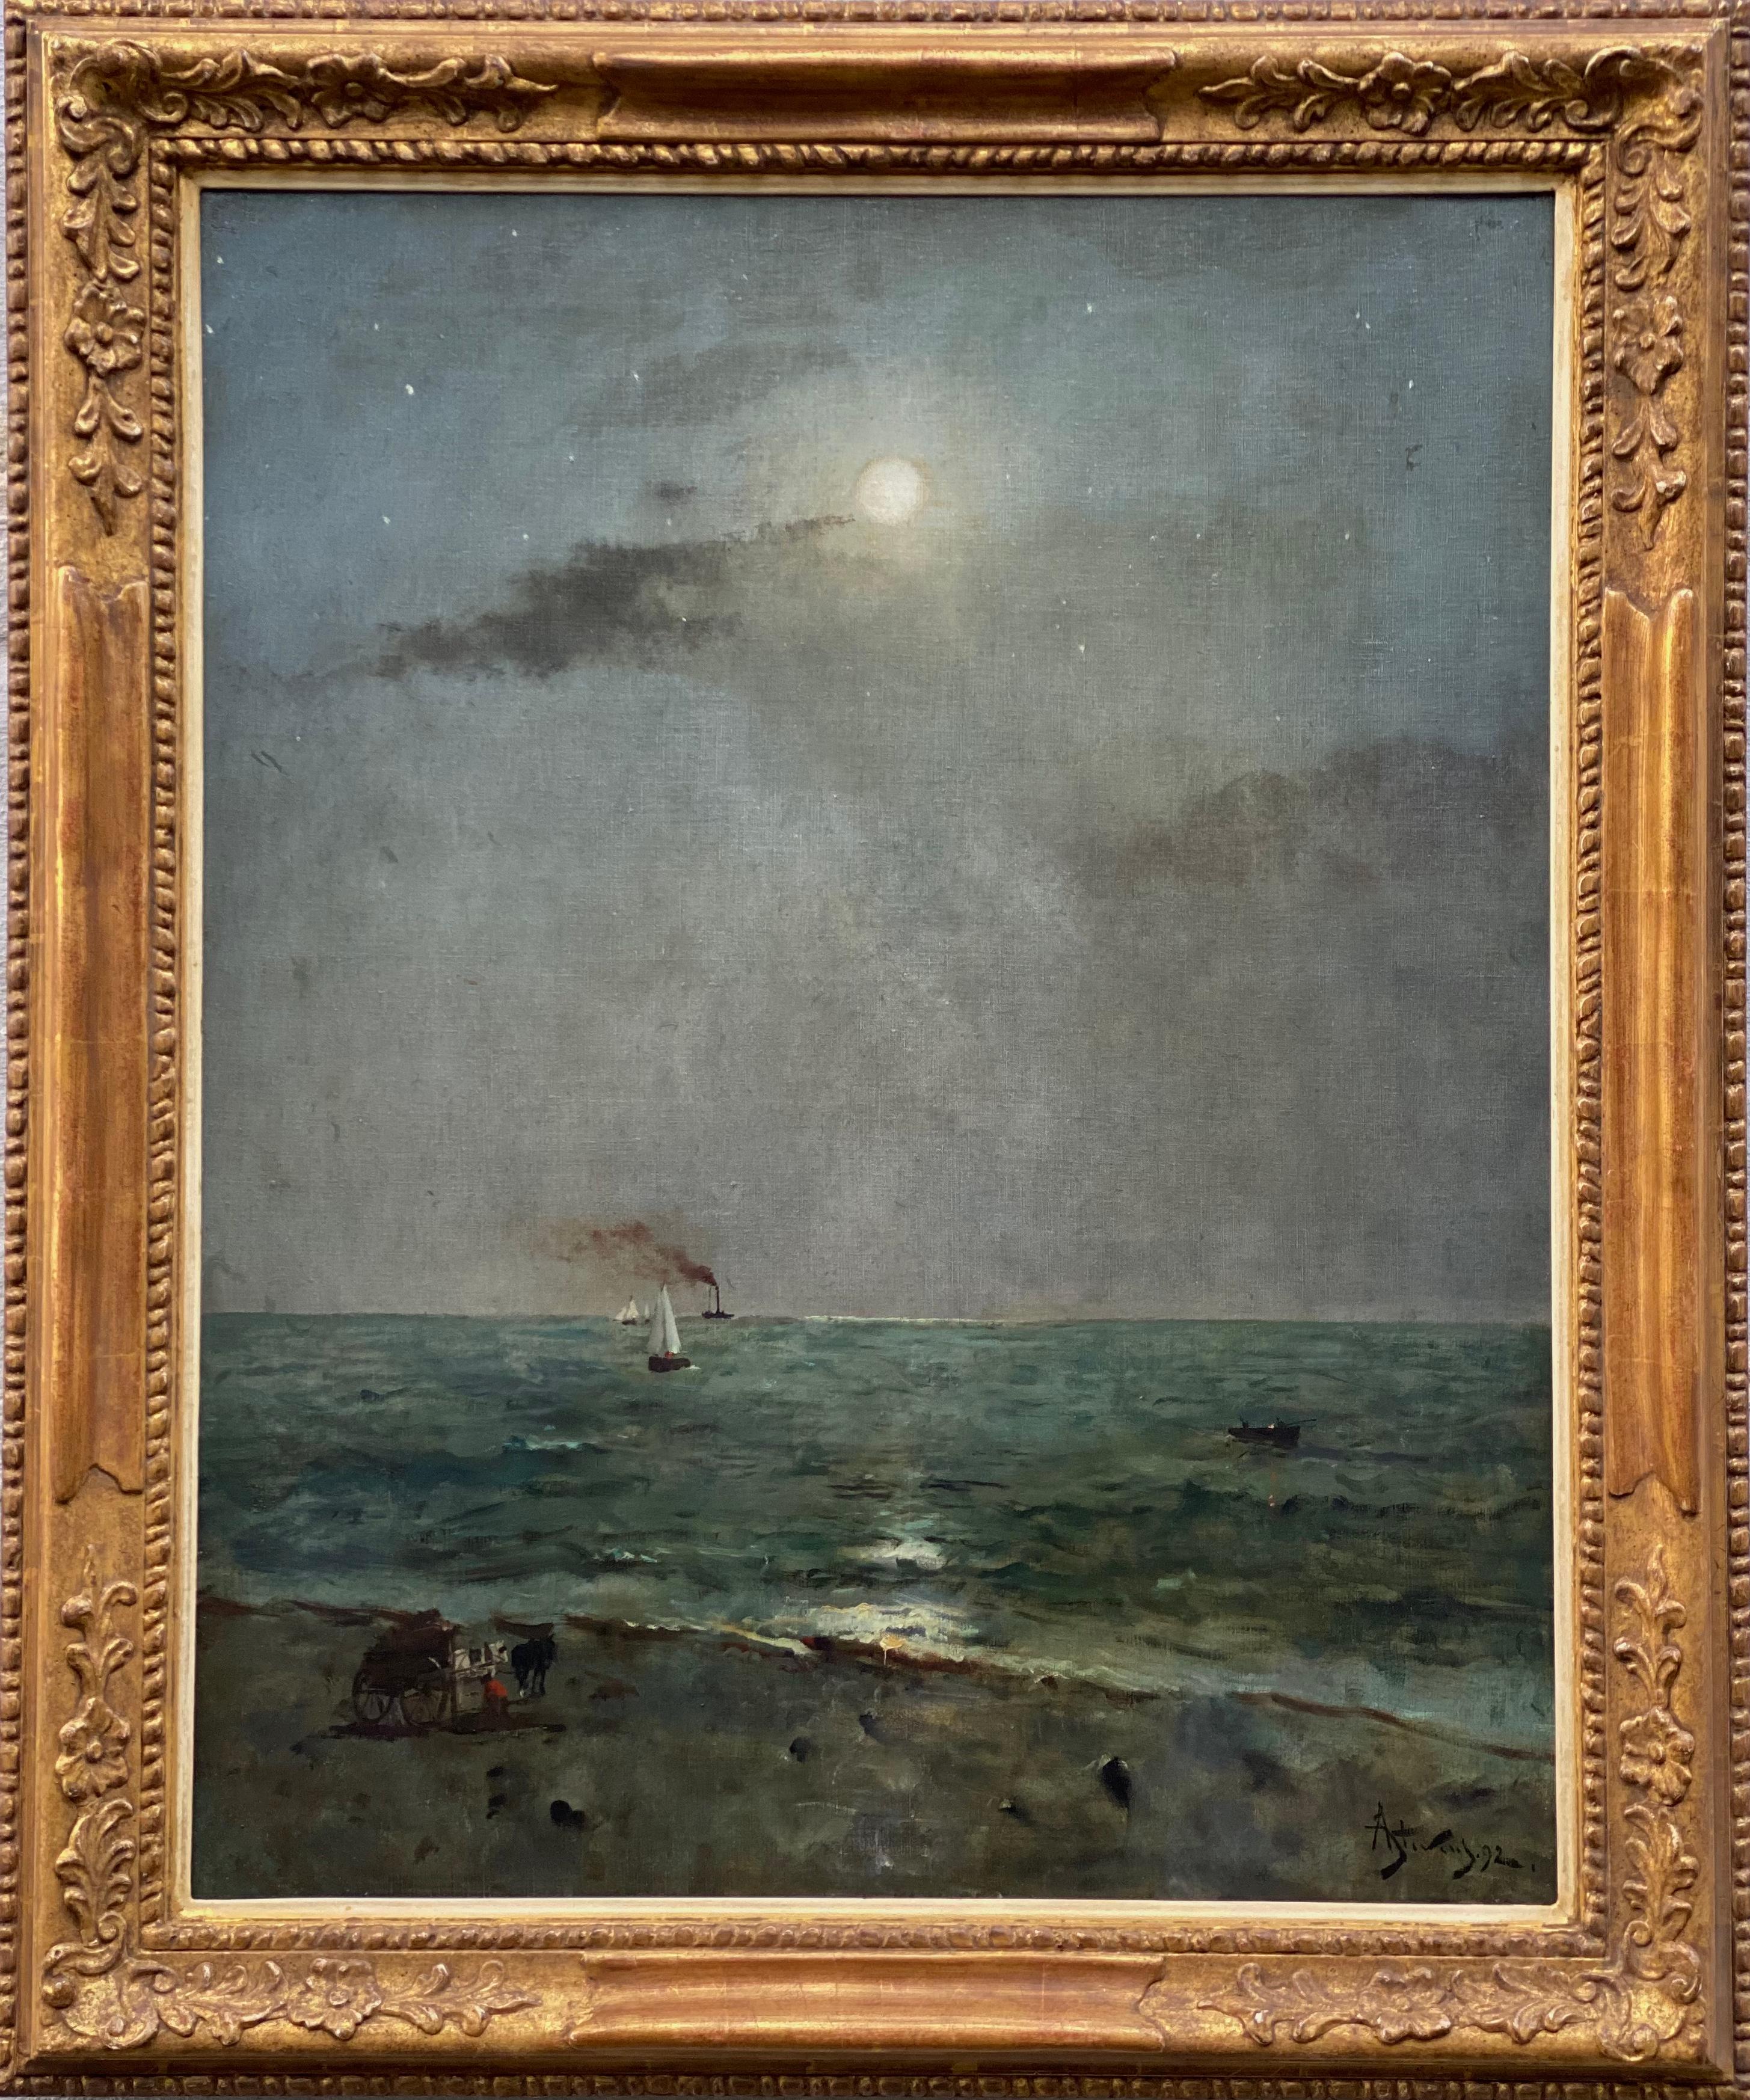 Stevens Alfred
Brussels 1823 – 1906 Paris
Belgian Painter

'Clair de Lune sur la Mer'
Signature: Signed lower right and dated 92
Medium: Oil on canvas
Dimensions: Image size 81 x 65 cm, frame size 97,50 x 81,50 cm

Provenance: 
- Collection M.